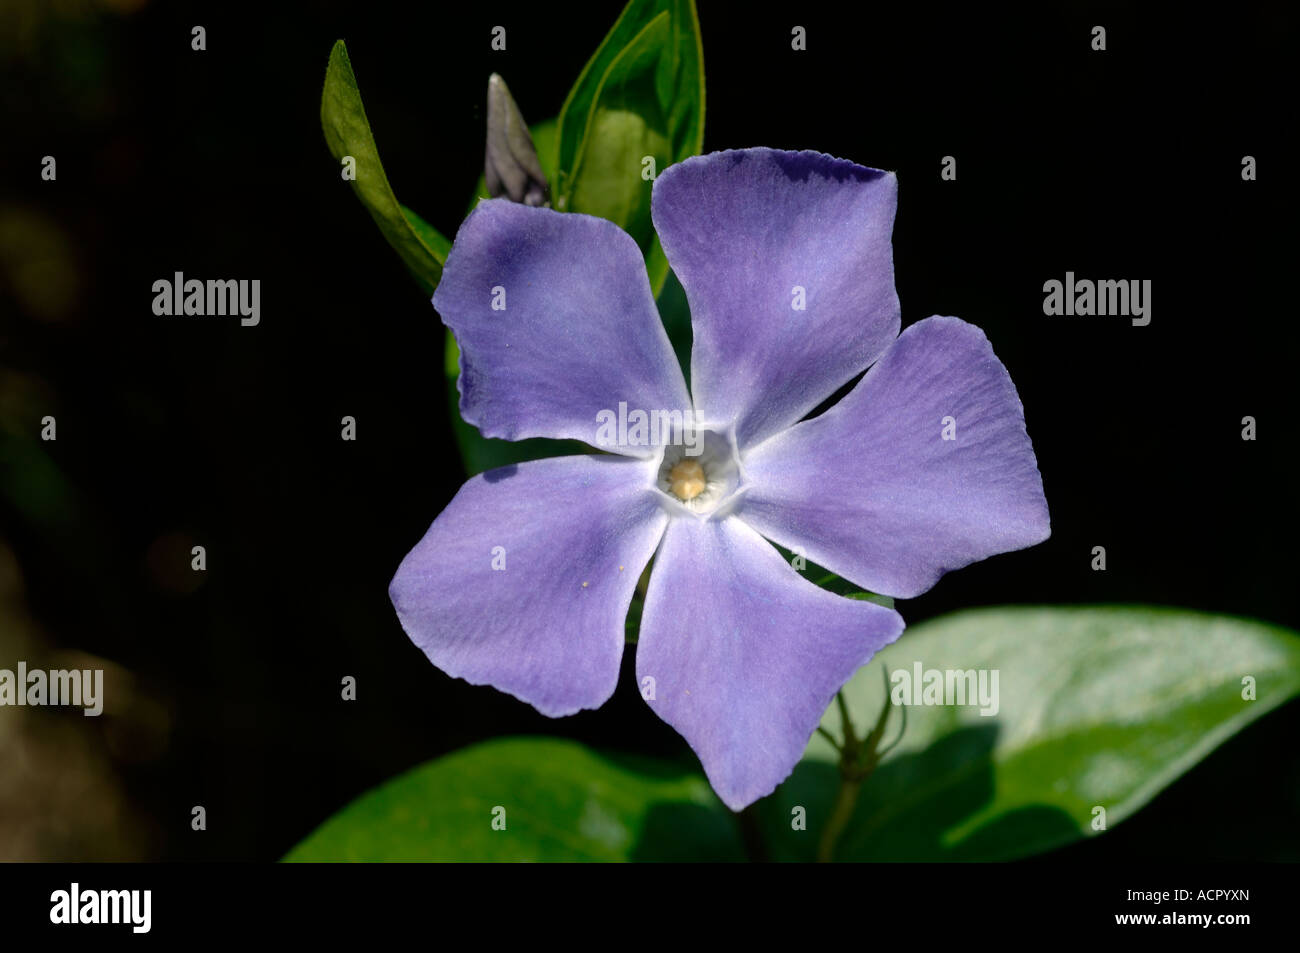 Greater periwinkle Vinca major blue flower against dark shadow background Stock Photo